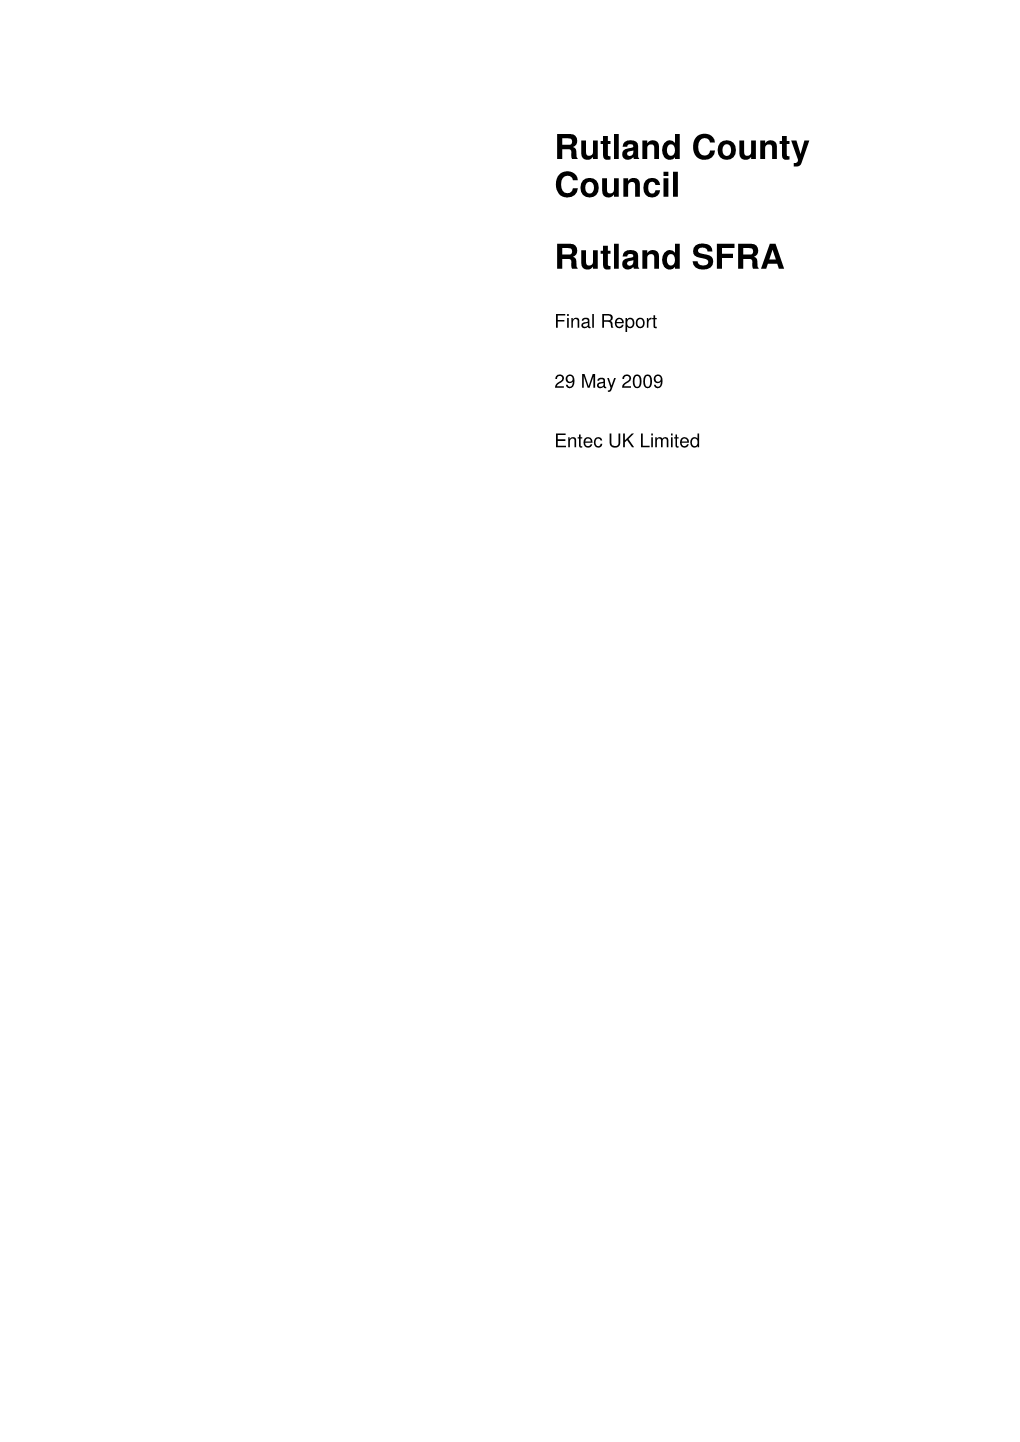 Rutland County Council Rutland SFRA